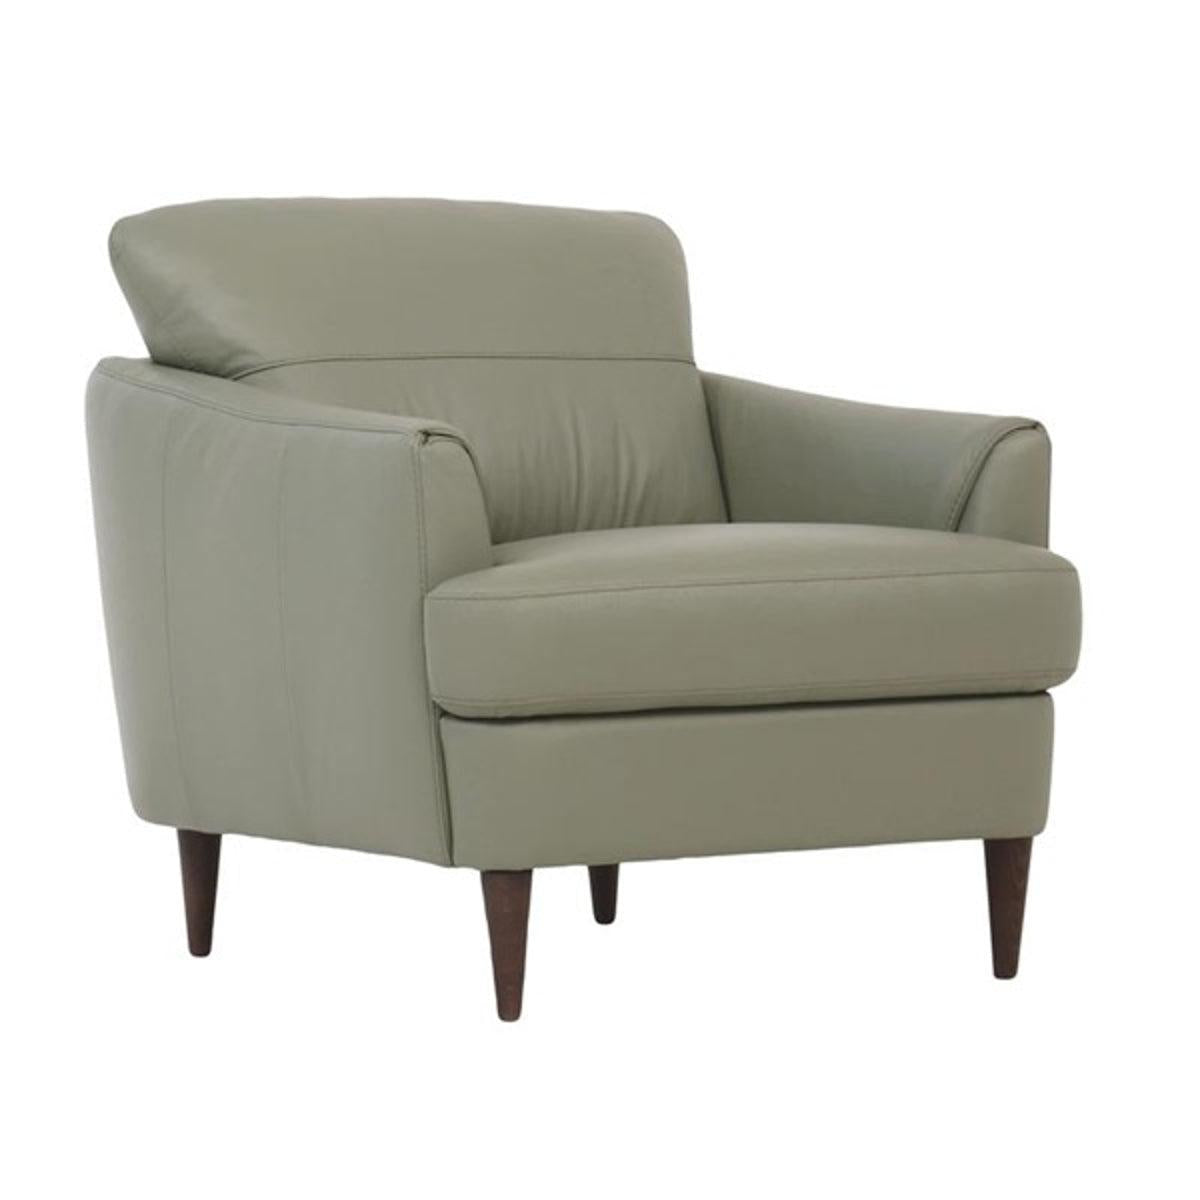 Acme Furniture Helena Chair in Moss Green 54572  Half Price Furniture